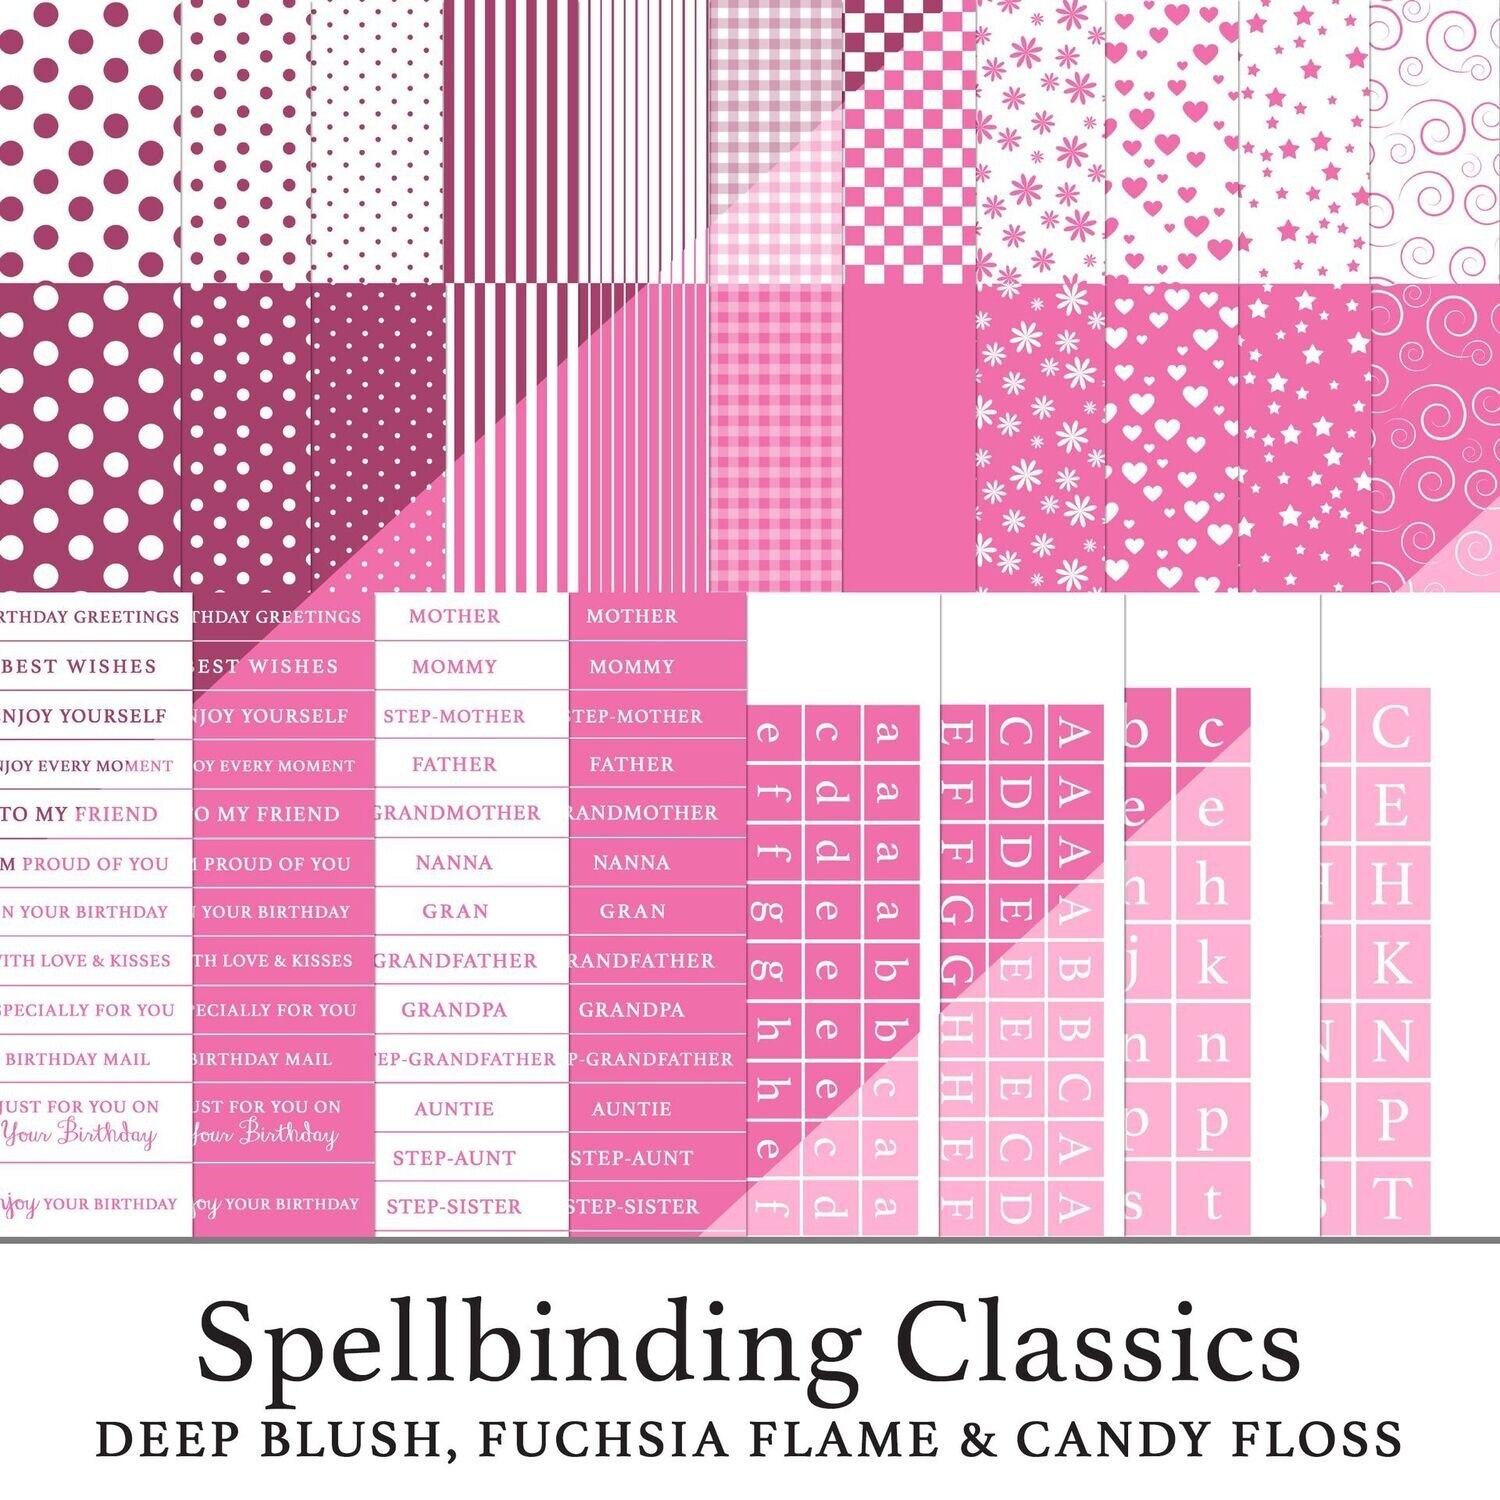 Spellbinding Classics Pinks - Deep Blush, Fuchsia Flame & Candy Floss Digital Kit BUNDLE